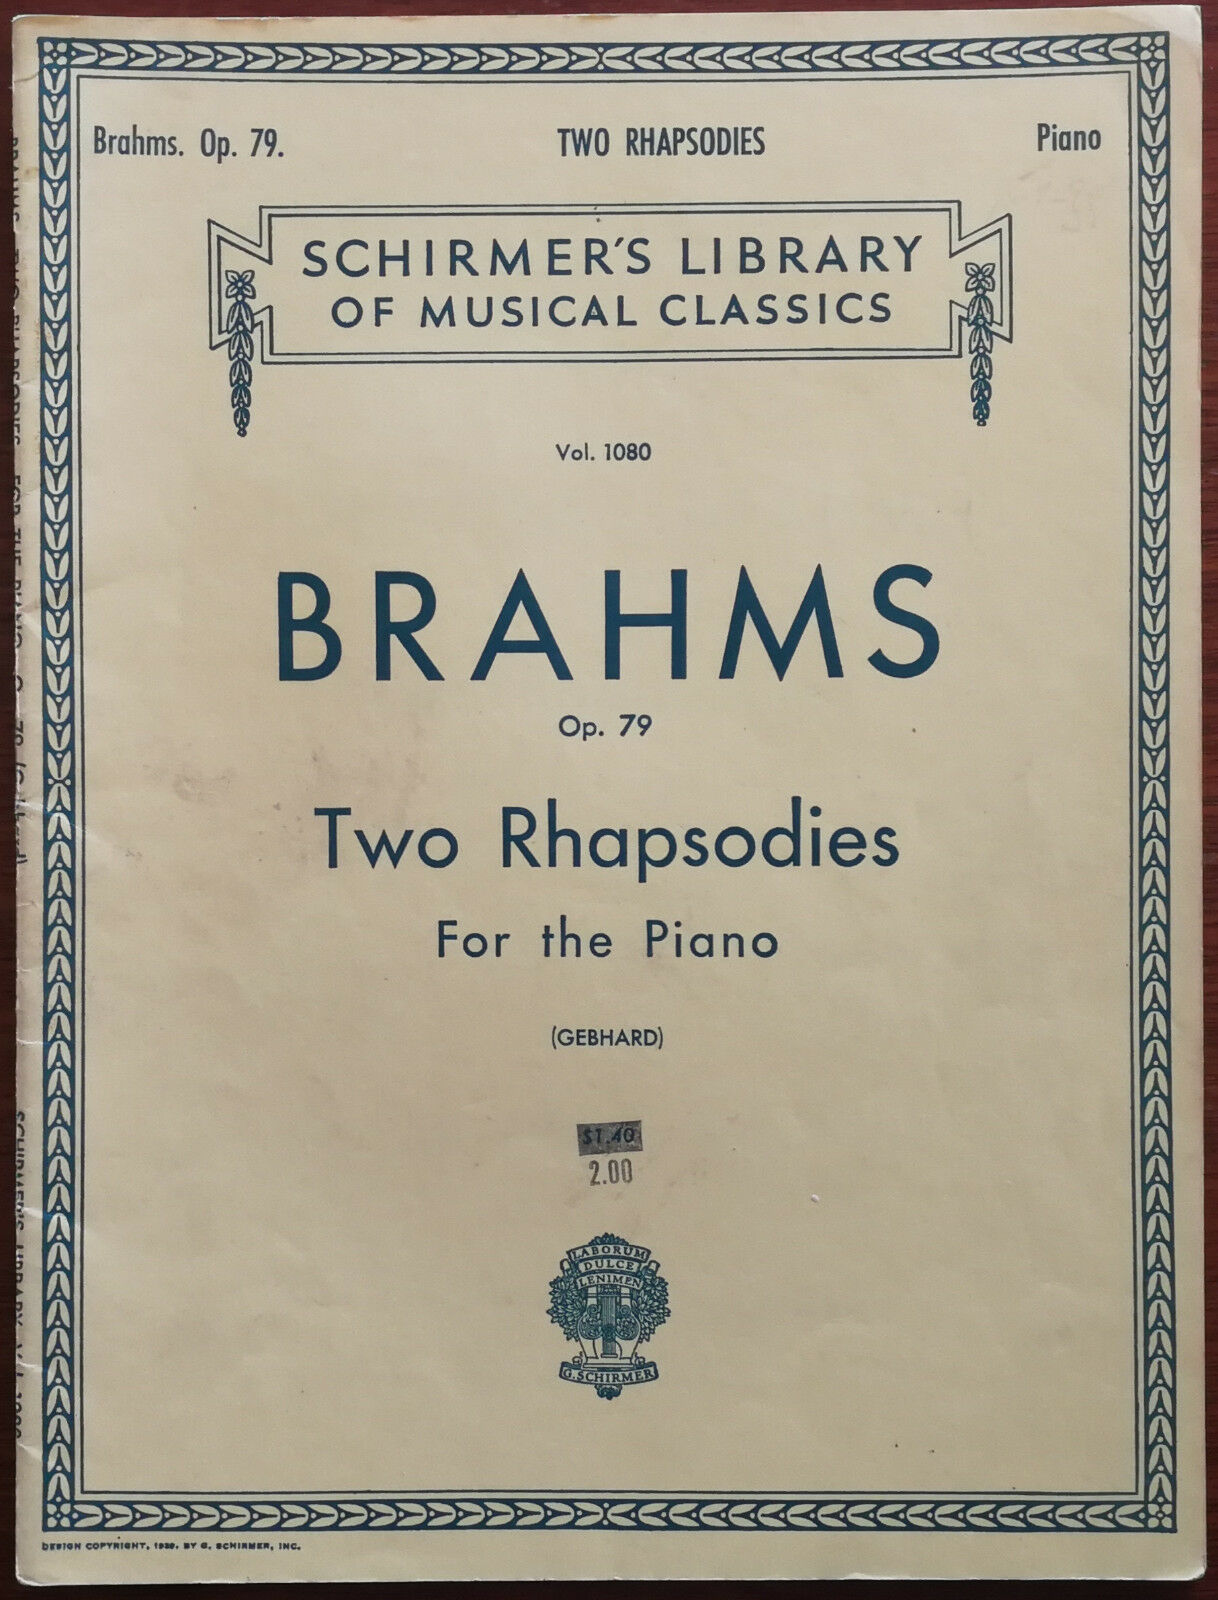 Brahms Op. 79 Two Rhapsodies For The Piano. G. Schirmer Inc. – Pub. 1939